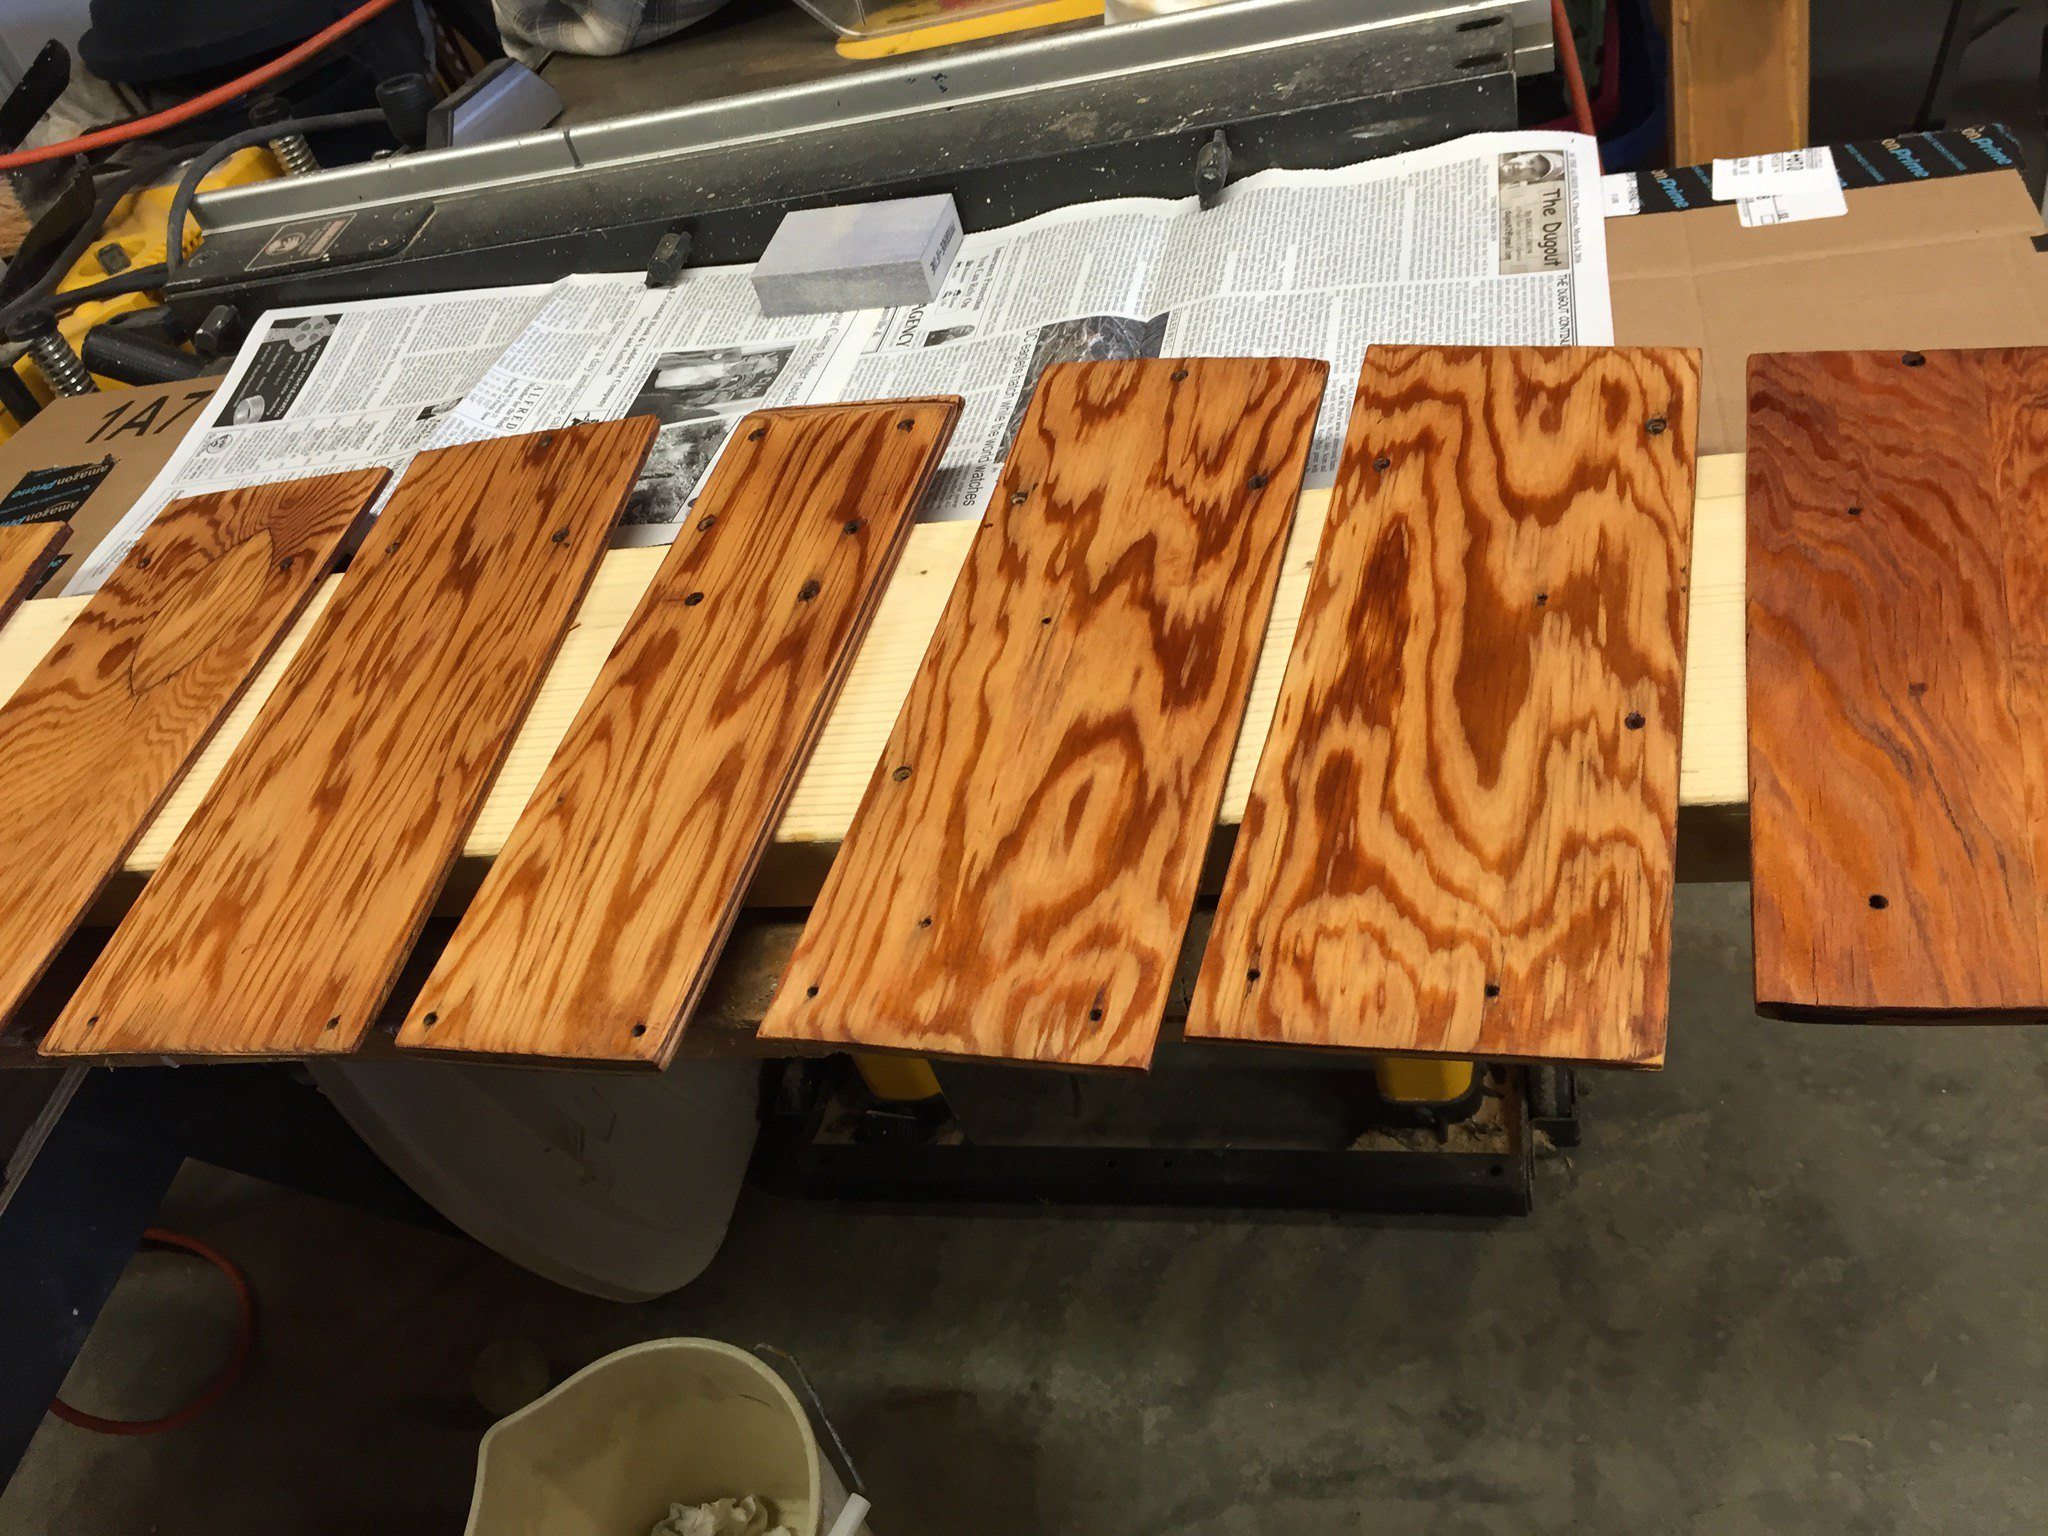 How To Make Plywood Look Nice, How To Make Plywood Floors Look Like Hardwood